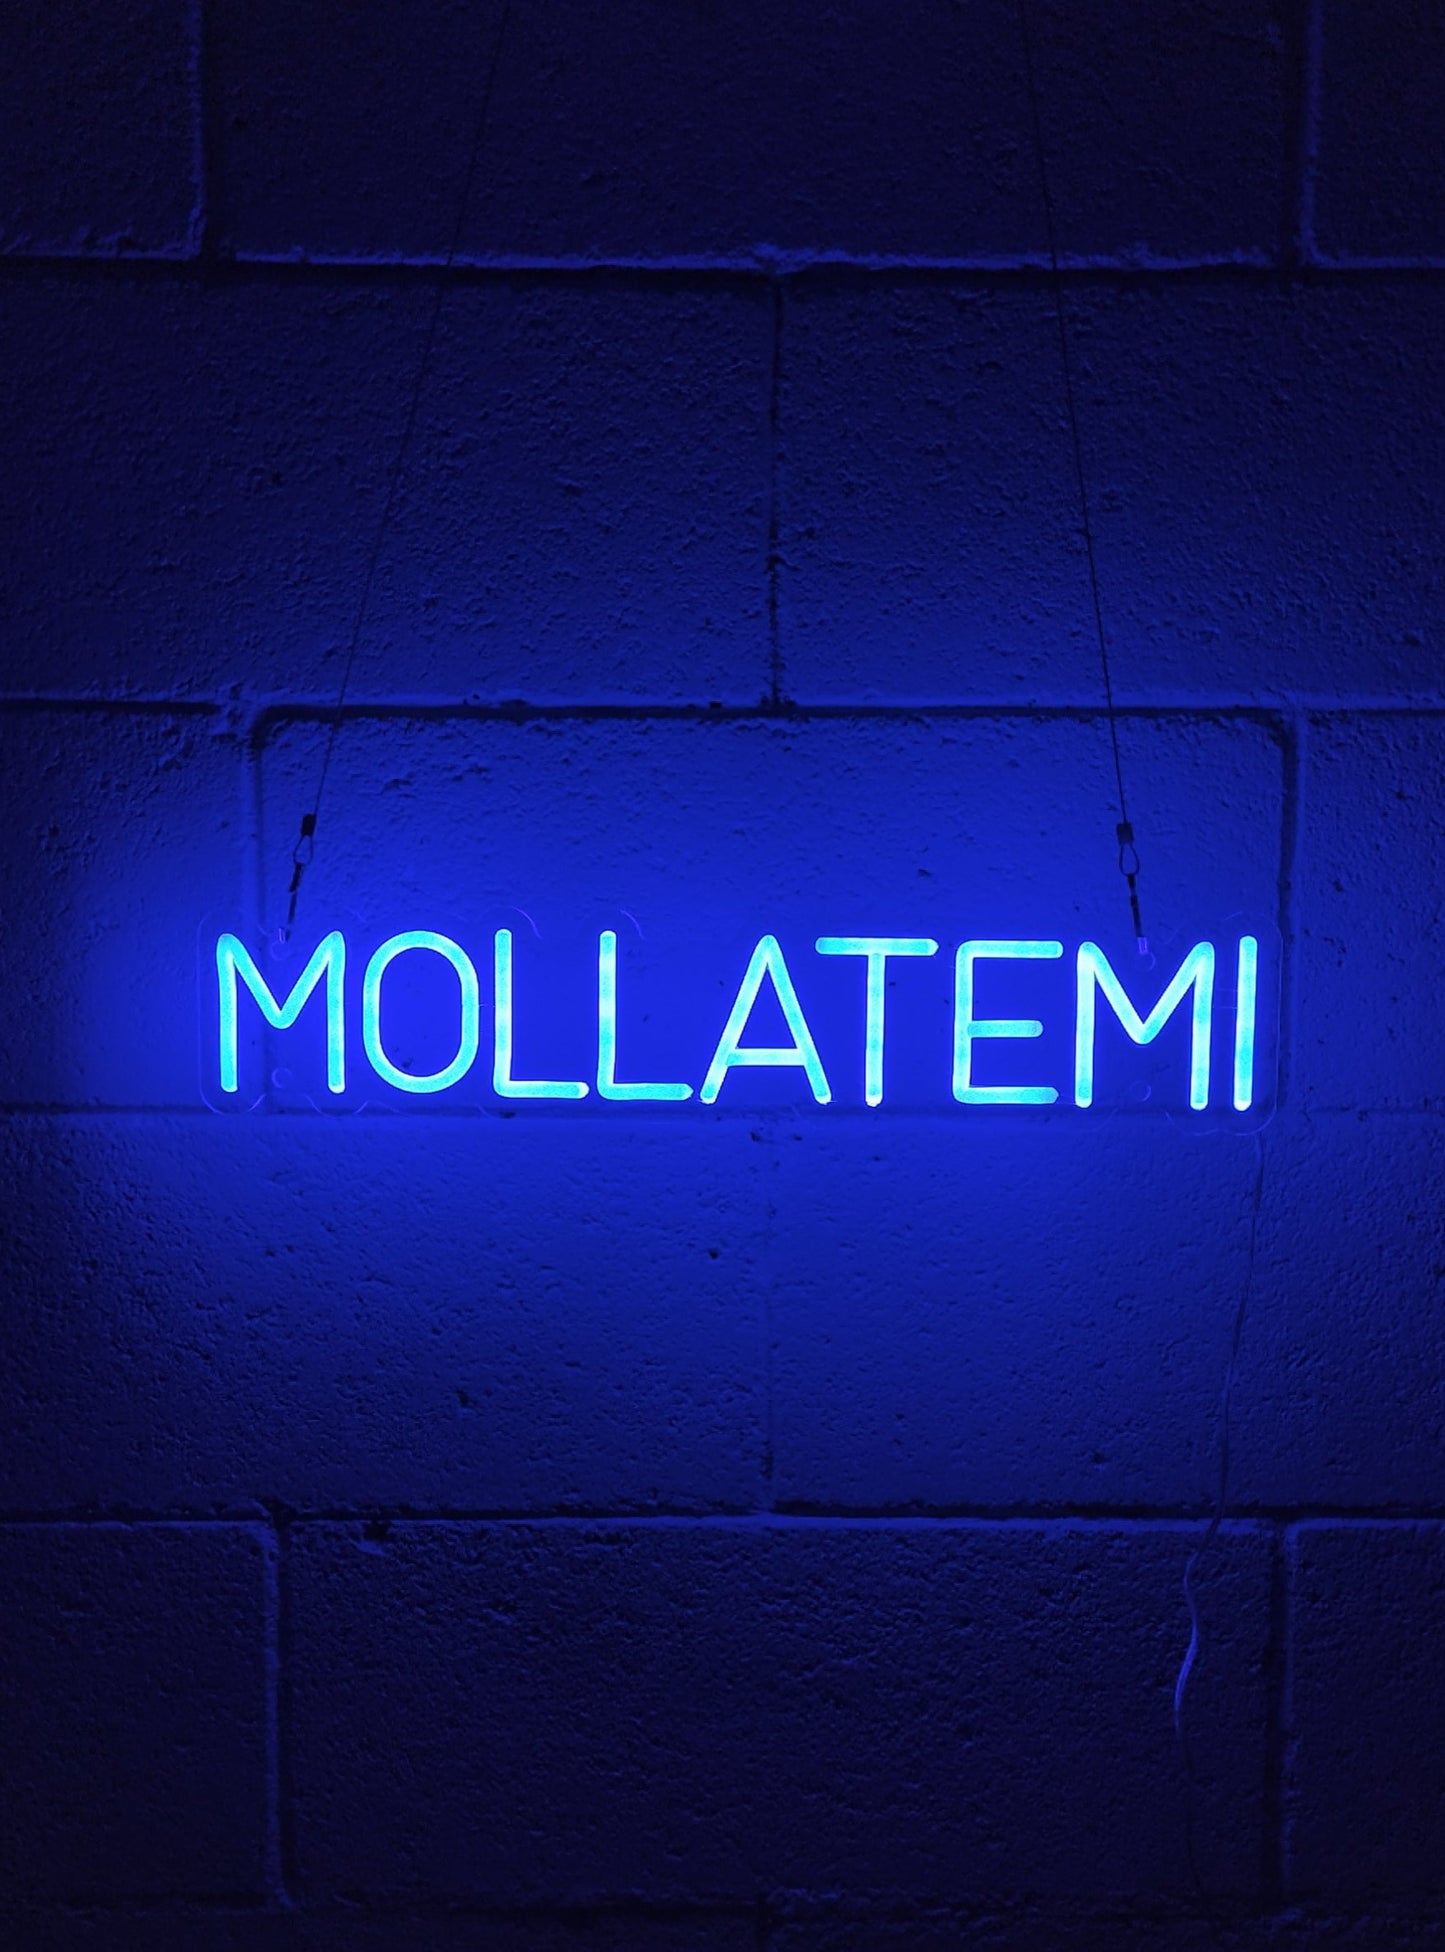 MOLLATEMI